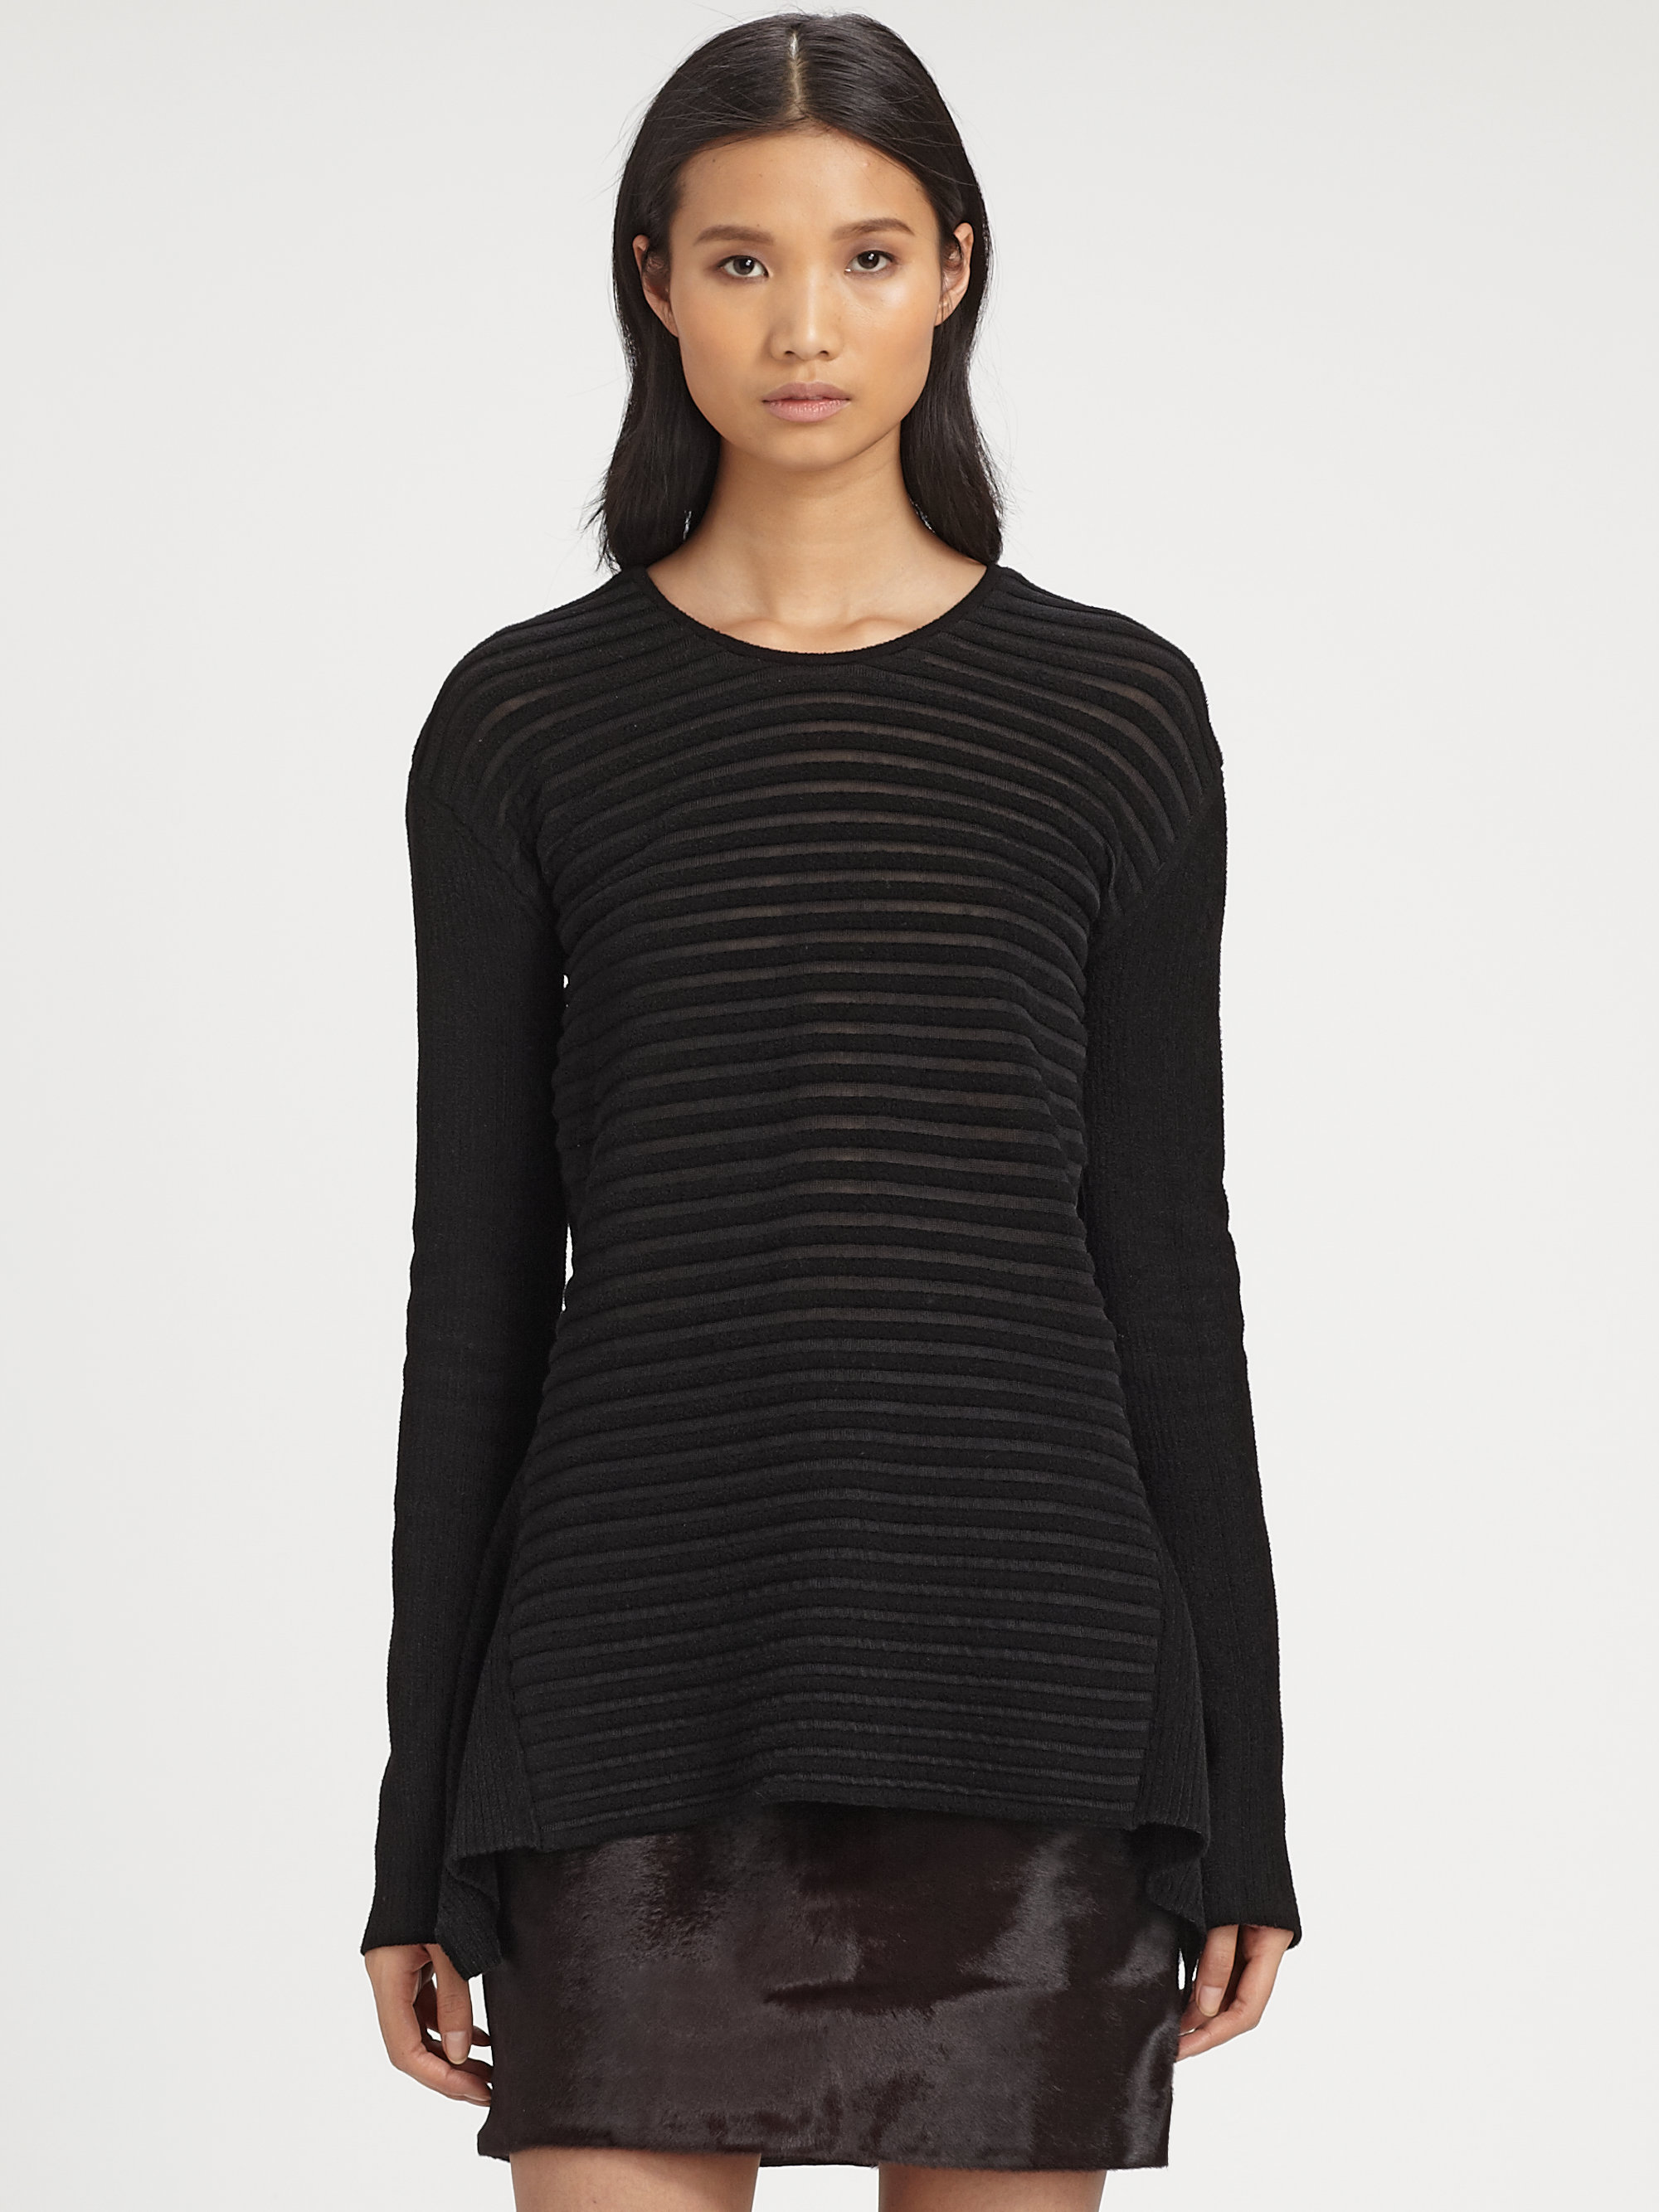 Alexander Wang Knit Mesh Asymmetrical Sweater in Black (ASPHALT) | Lyst